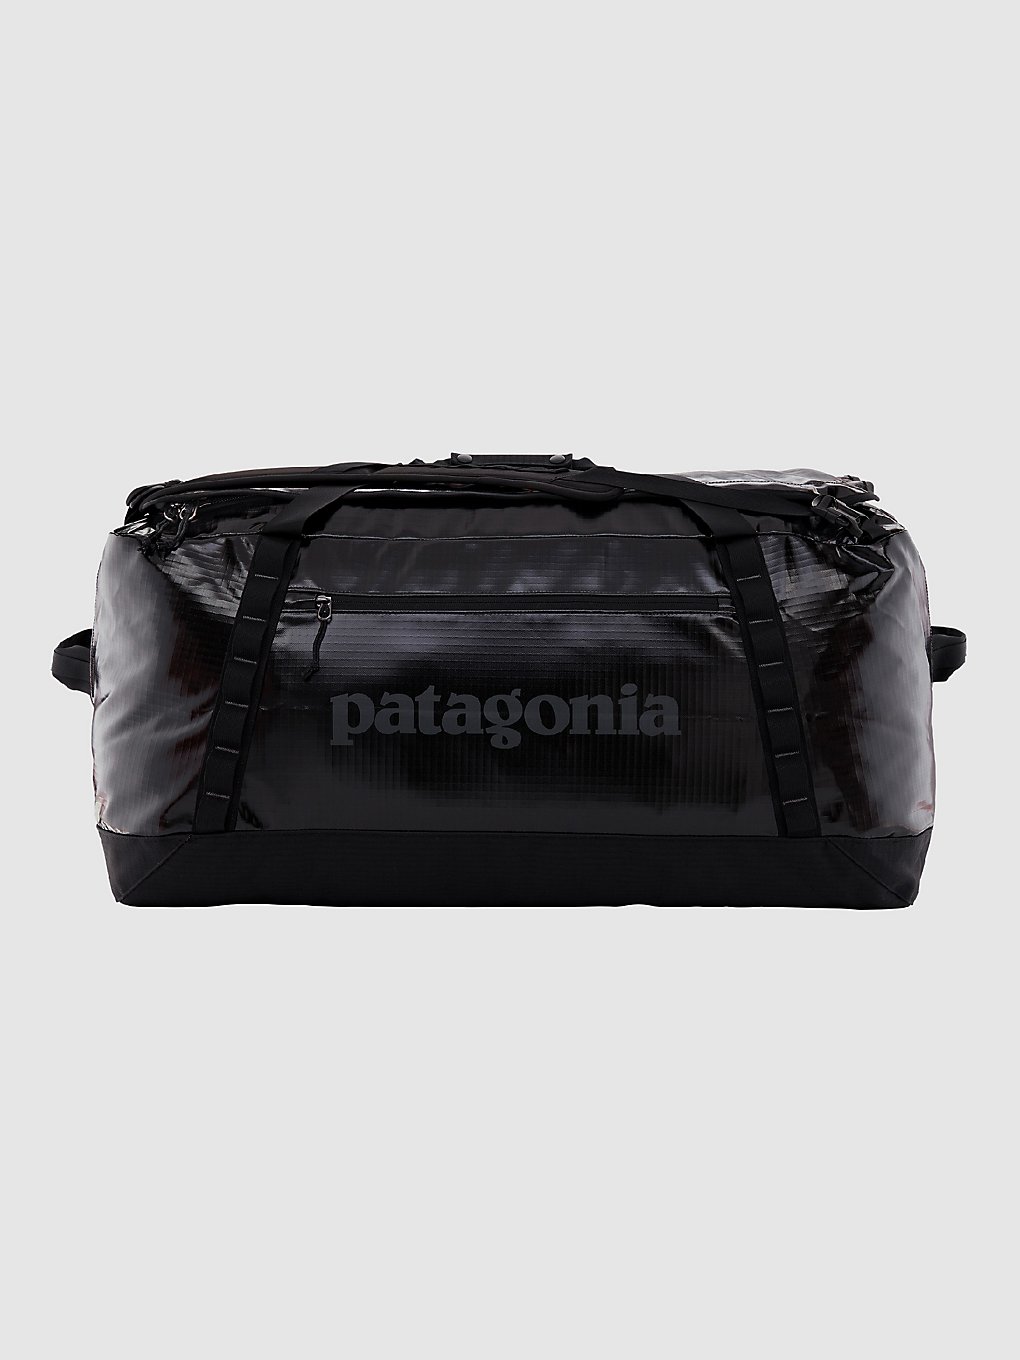 Patagonia Black Hole 100L Reisetasche black kaufen